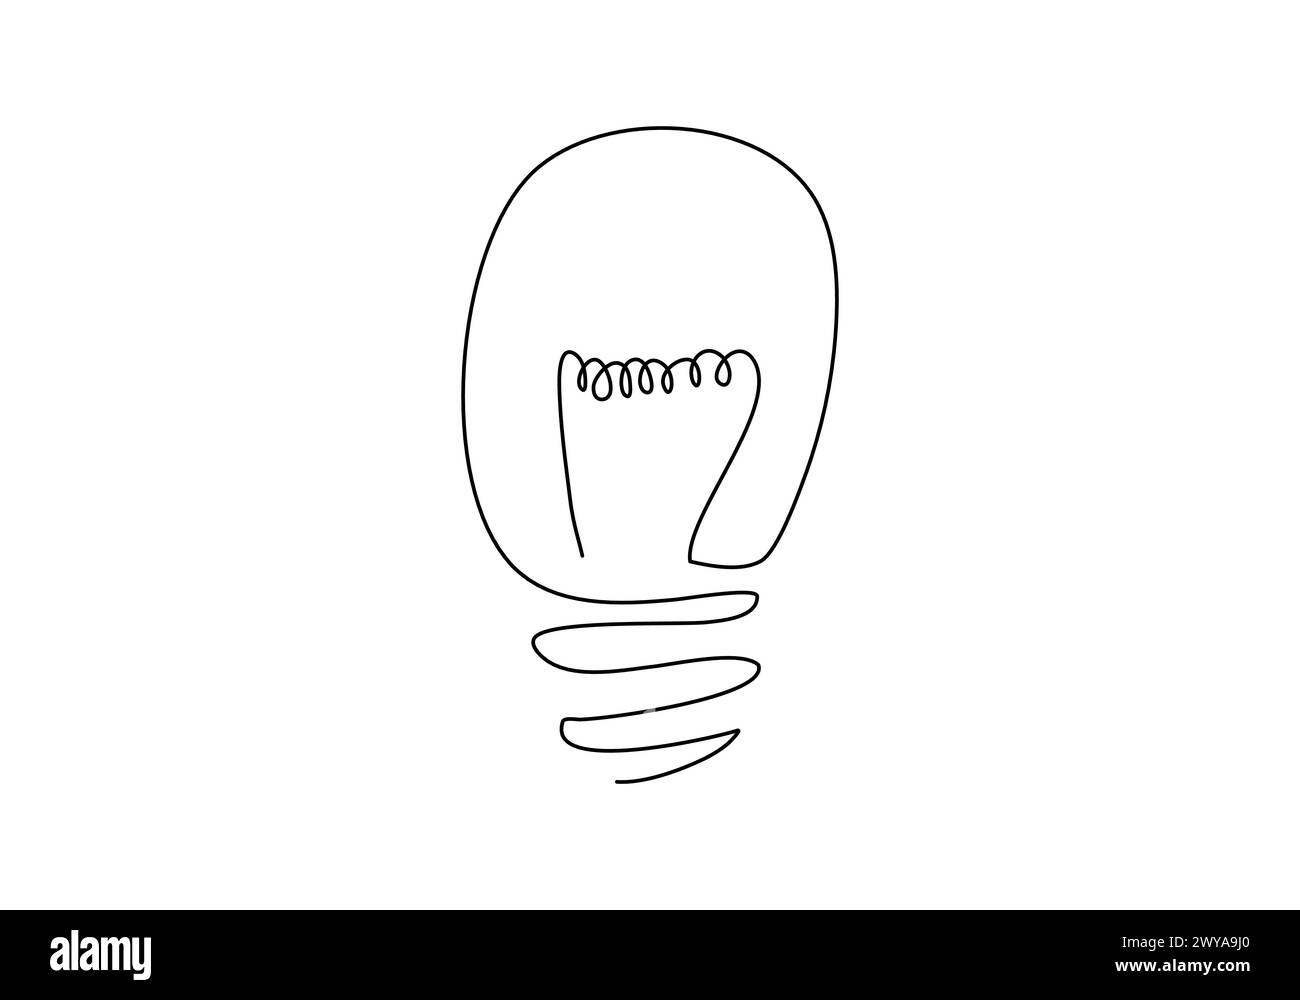 Light bulb. One line drawing vector illustration. Stock Vector